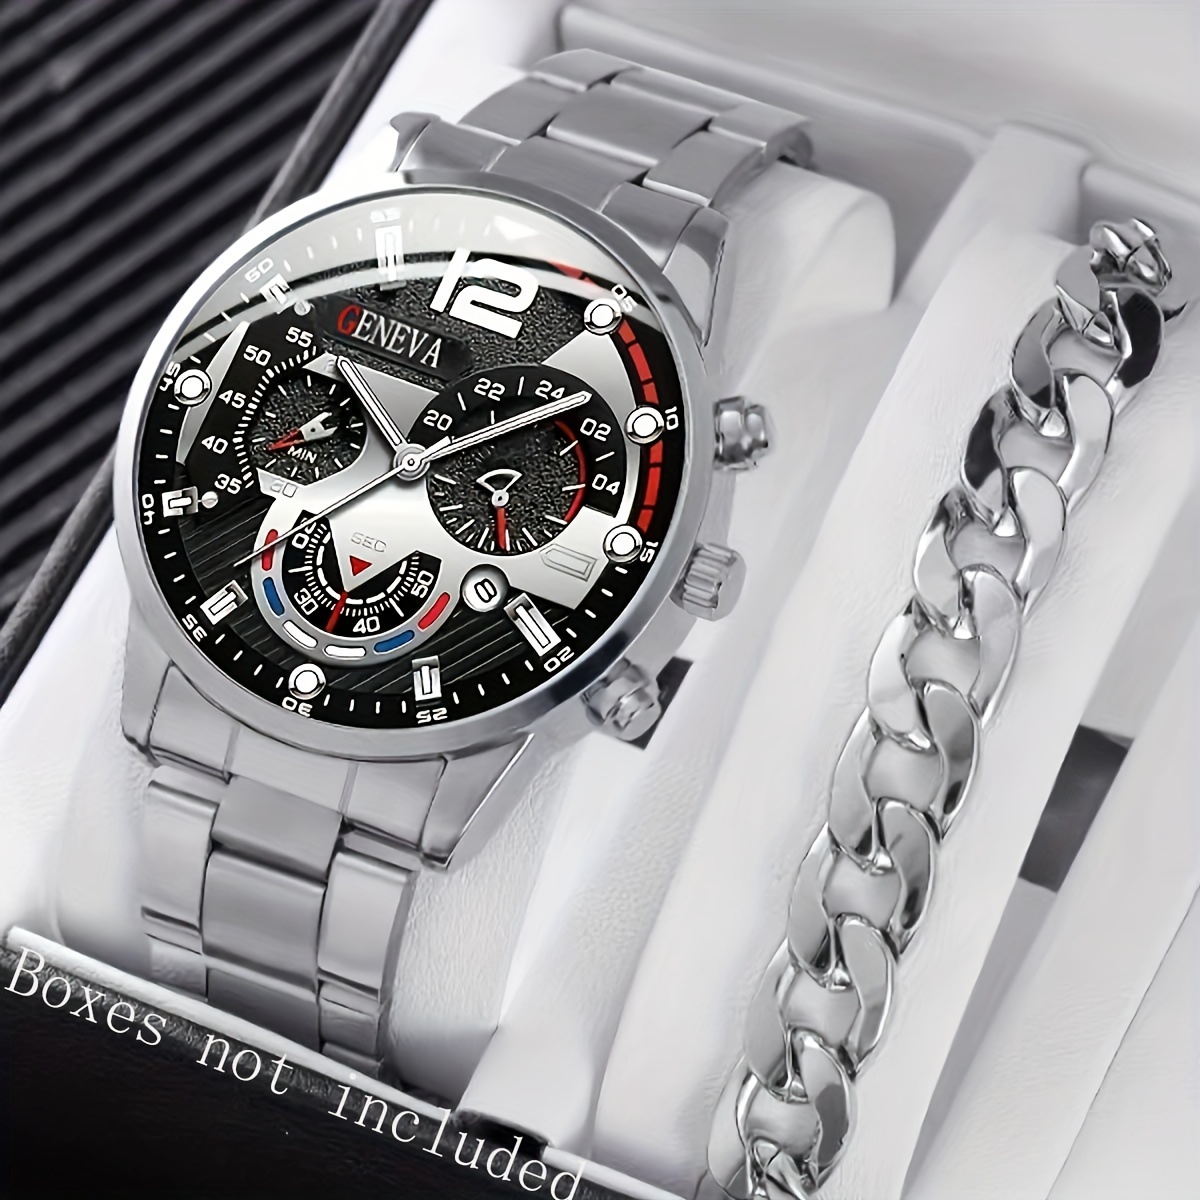 

2pcs/set Men's Business Sports Quartz Watch Cool Fashion Analog Calendar Wrist Watch & Bracelet, Gift For Him Date Watch